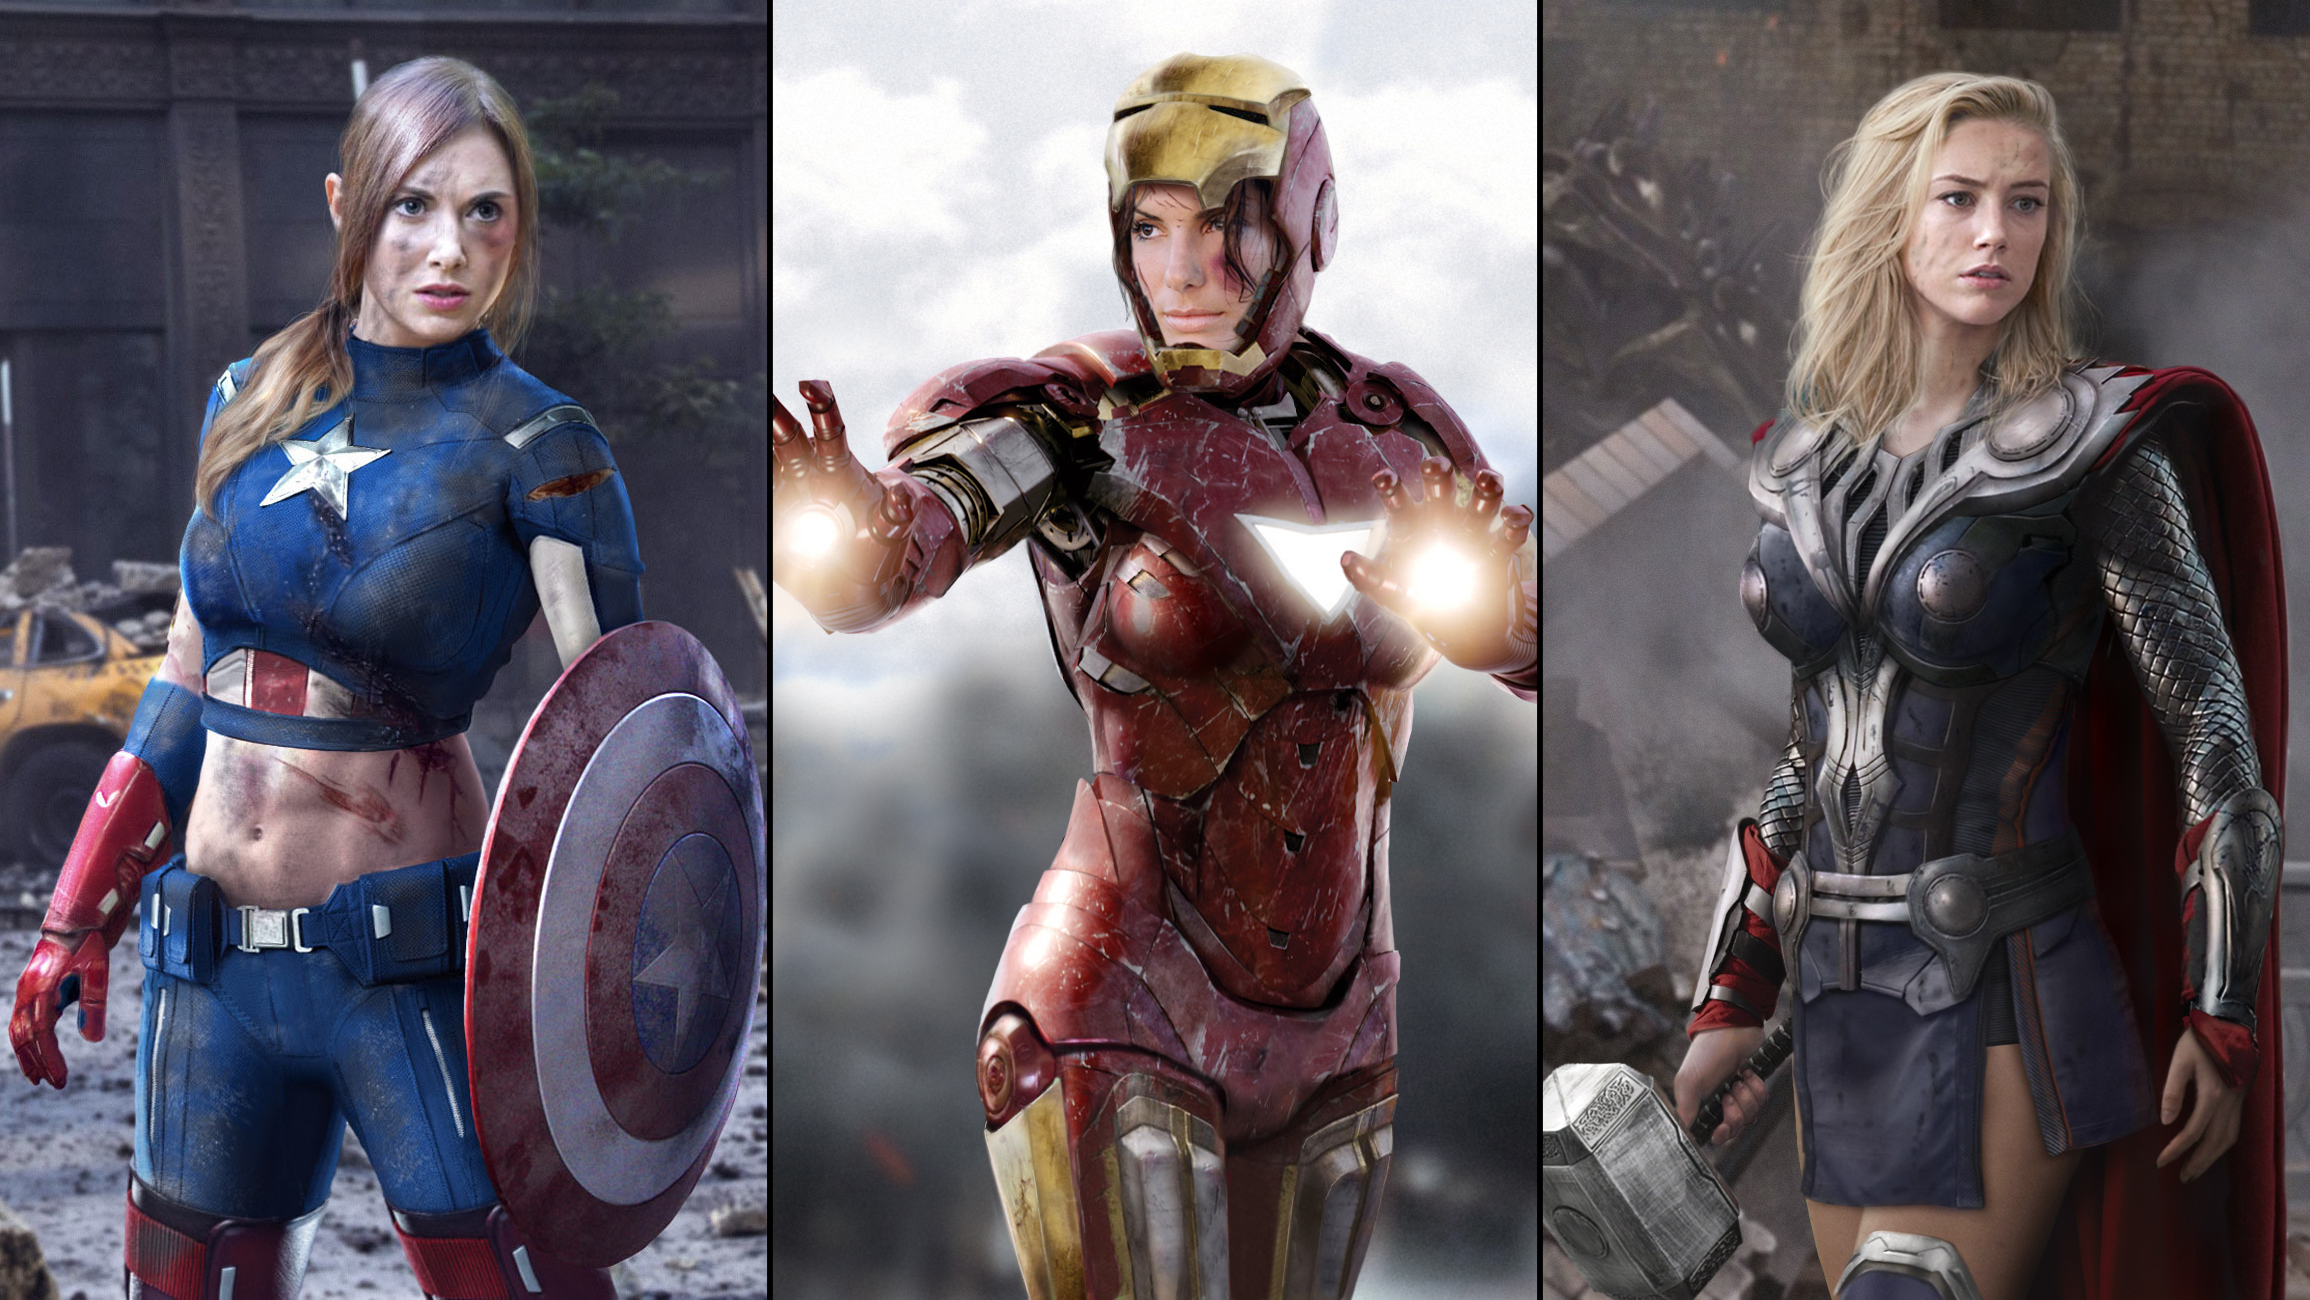 #superheroines, #Captain America, #Iron Man, #Amber Heard, #Thor, # collage, #Marvel Comics, #Photoshop, #Sandra Bullock, #Alison Brie, #photo manipulation, wallpaper. Mocah HD Wallpaper